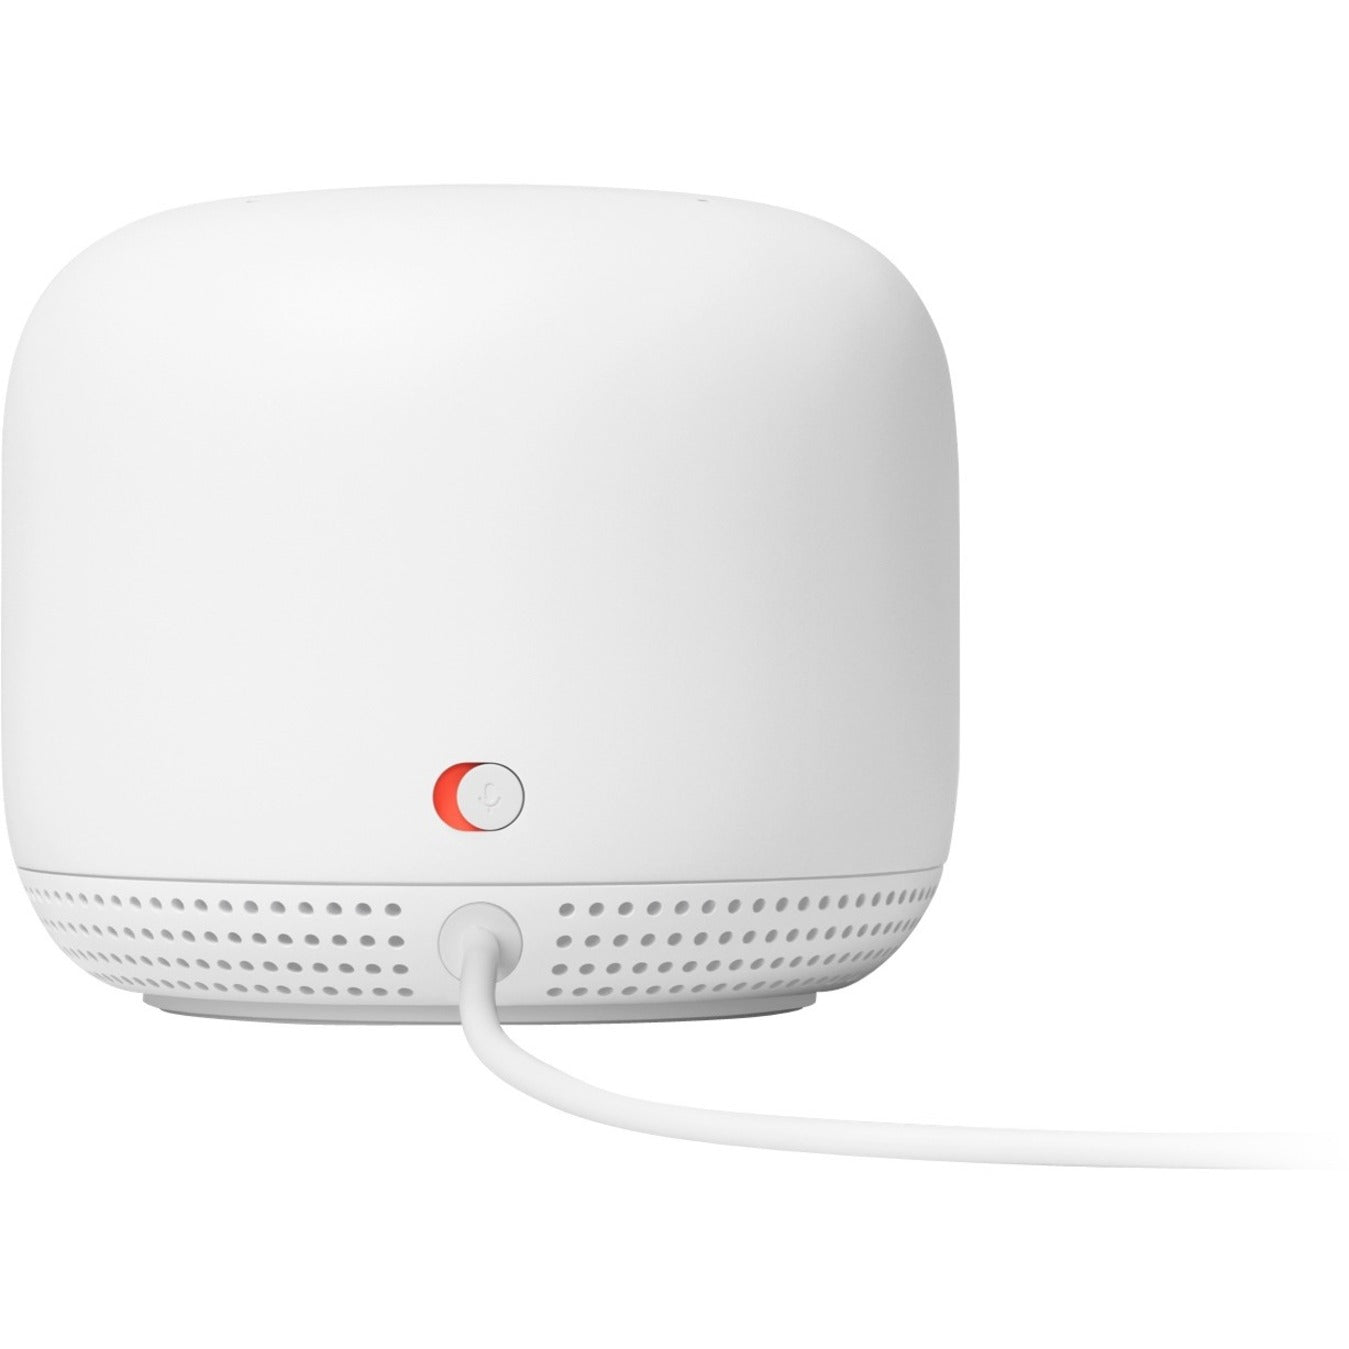 Google GA00822-US Nest Wifi Wireless Router, Wi-Fi 5 IEEE 802.11ac Ethernet, 275 MB/s Transmission Speed